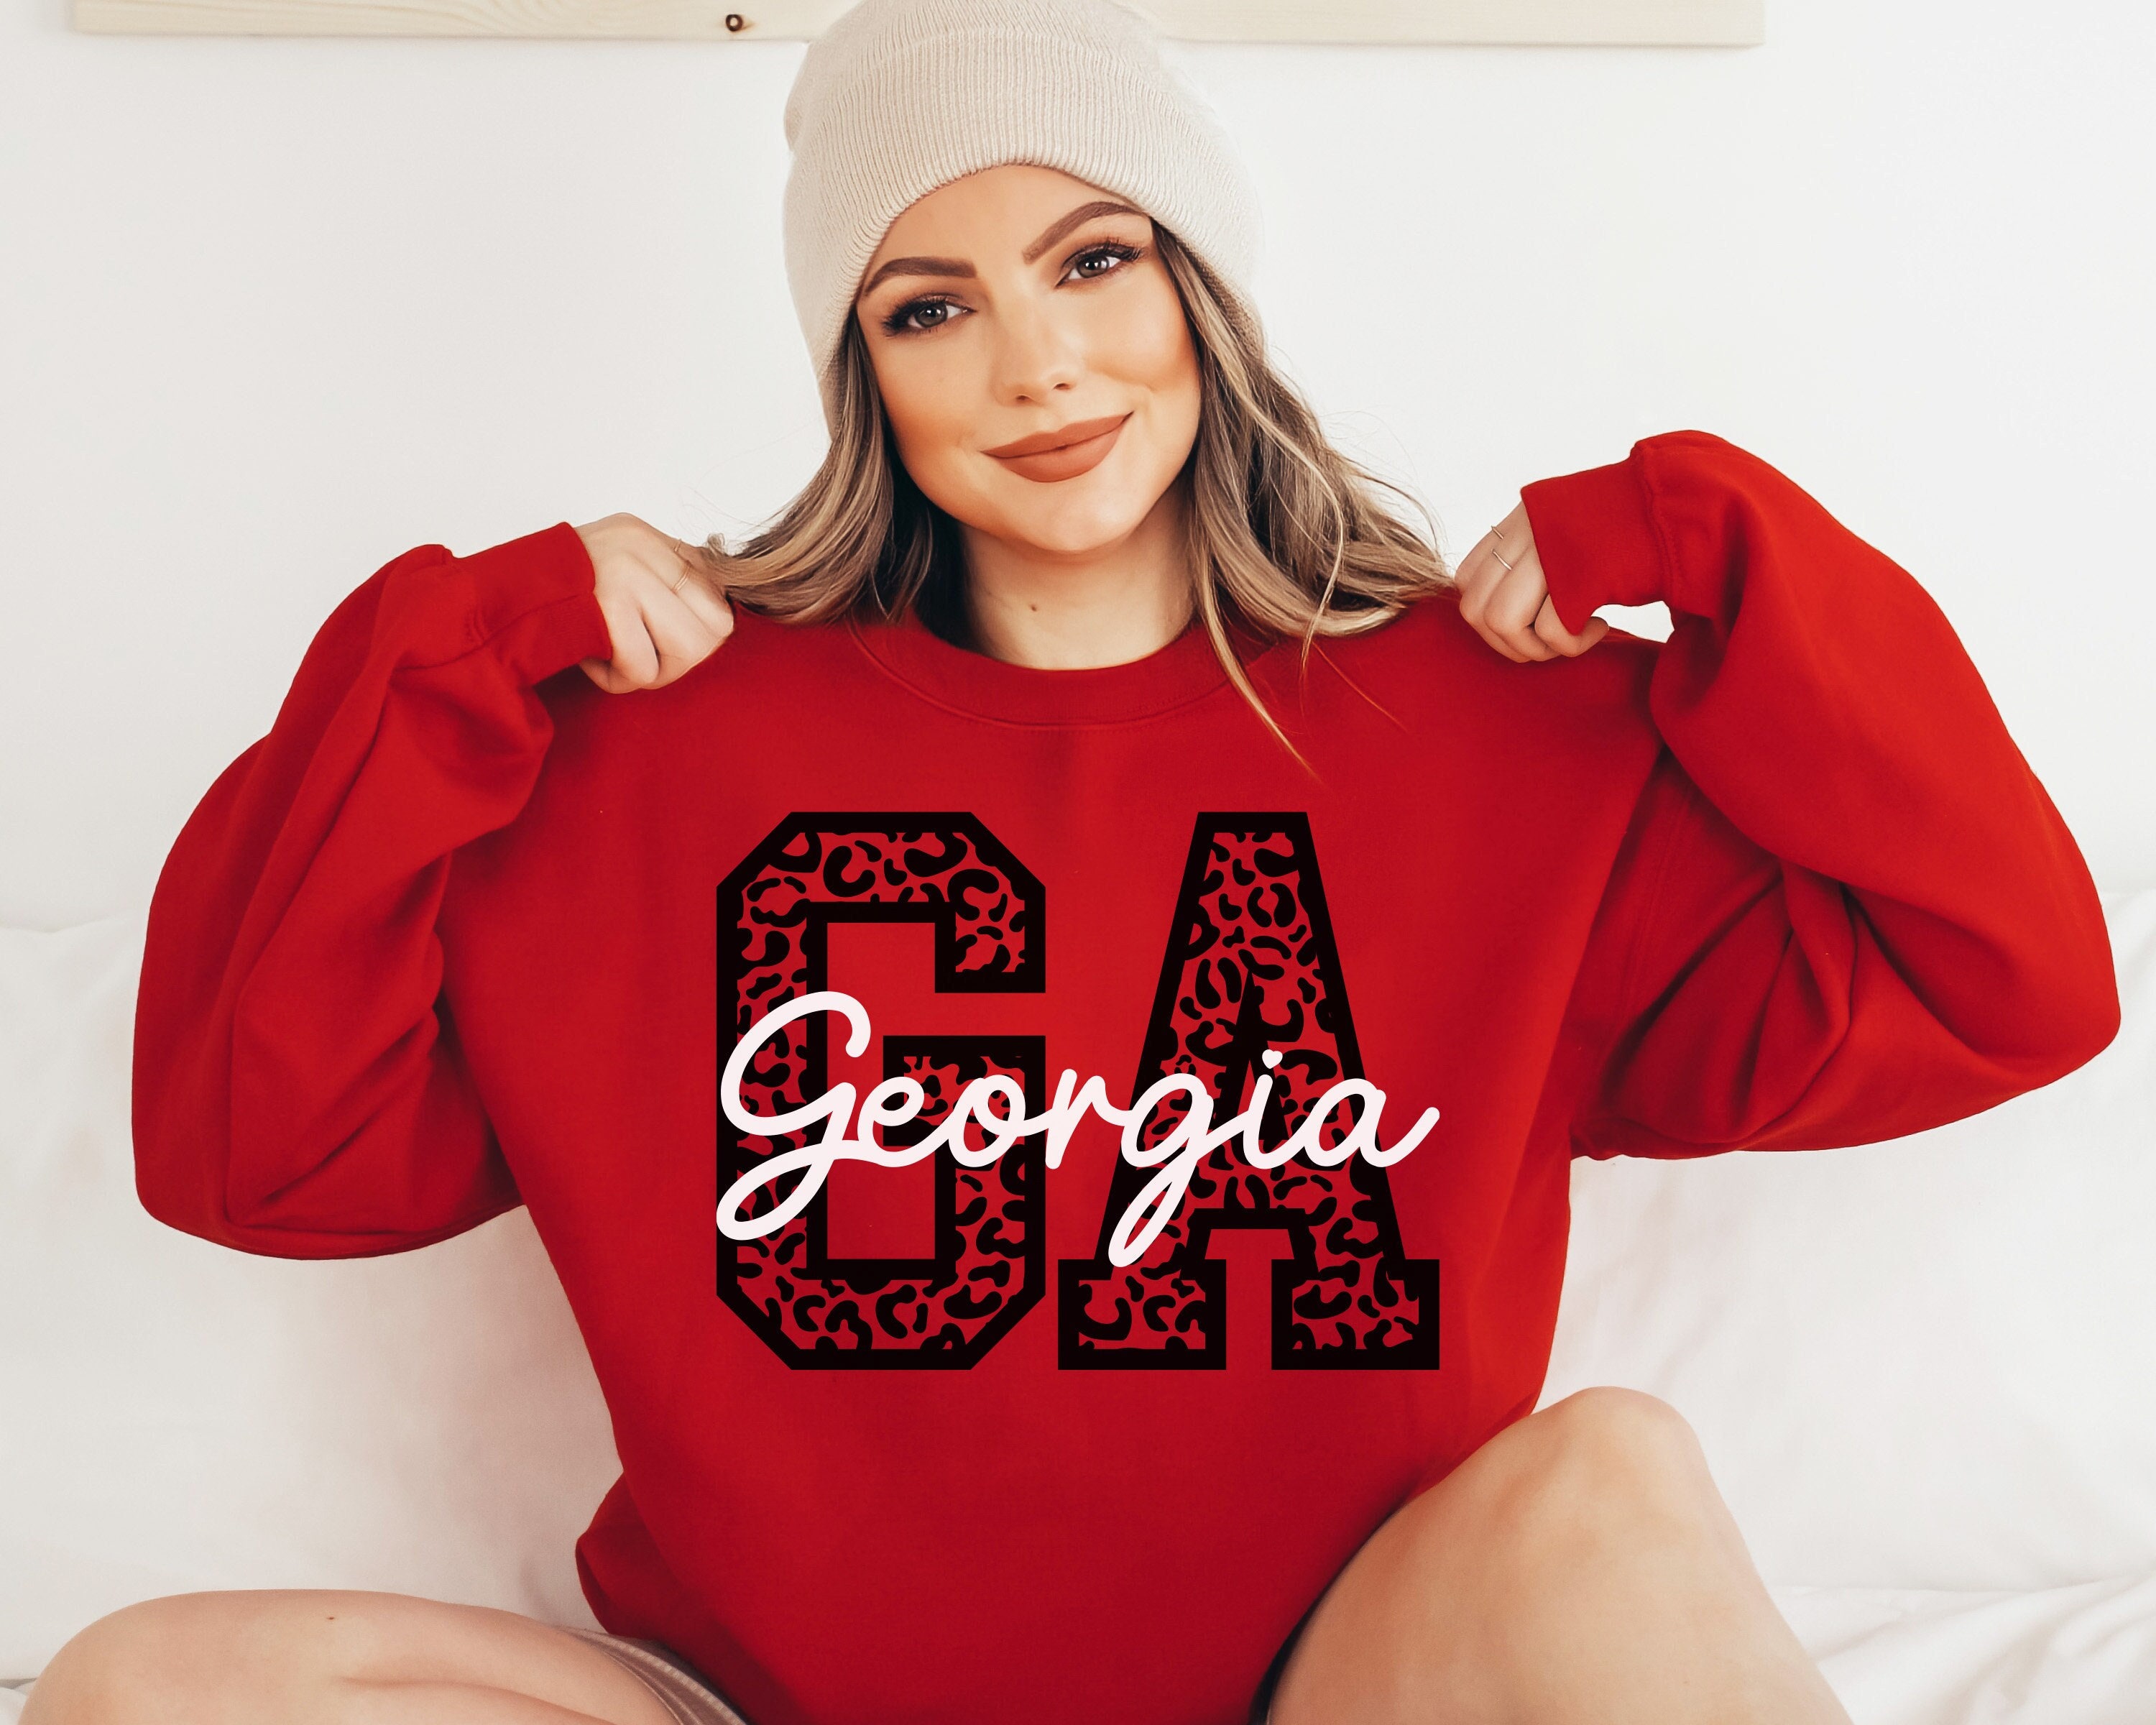 Georgia 3 Peat Shirts – Dual Graphic Designs